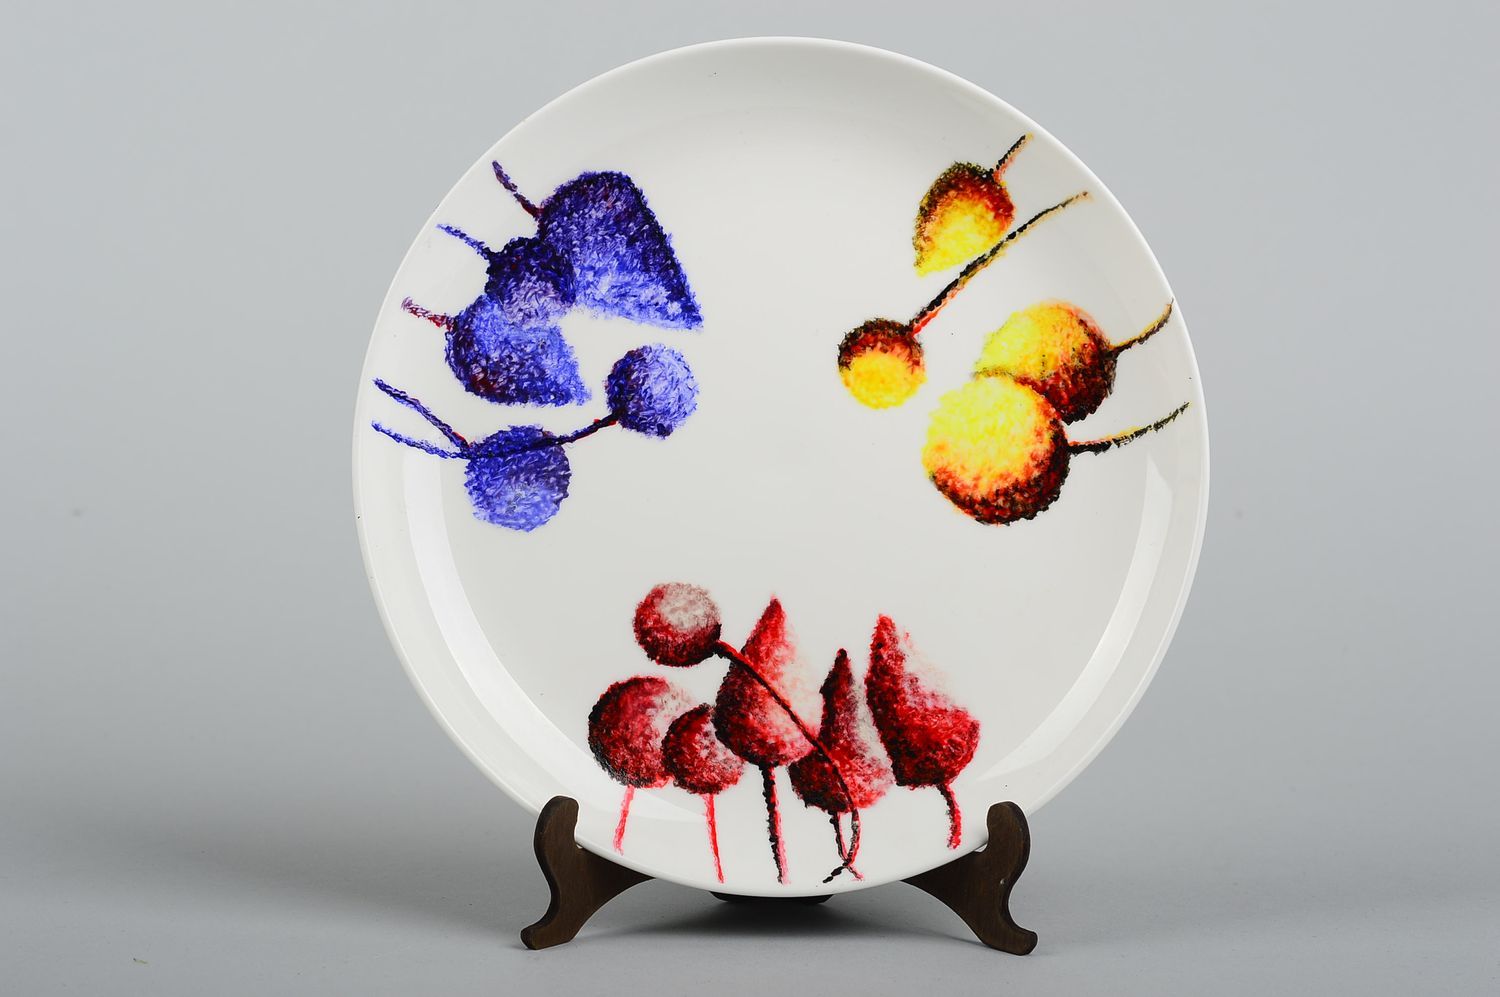 Handmade ceramic plate ornamented designer kitchenware painted unusual decor photo 4